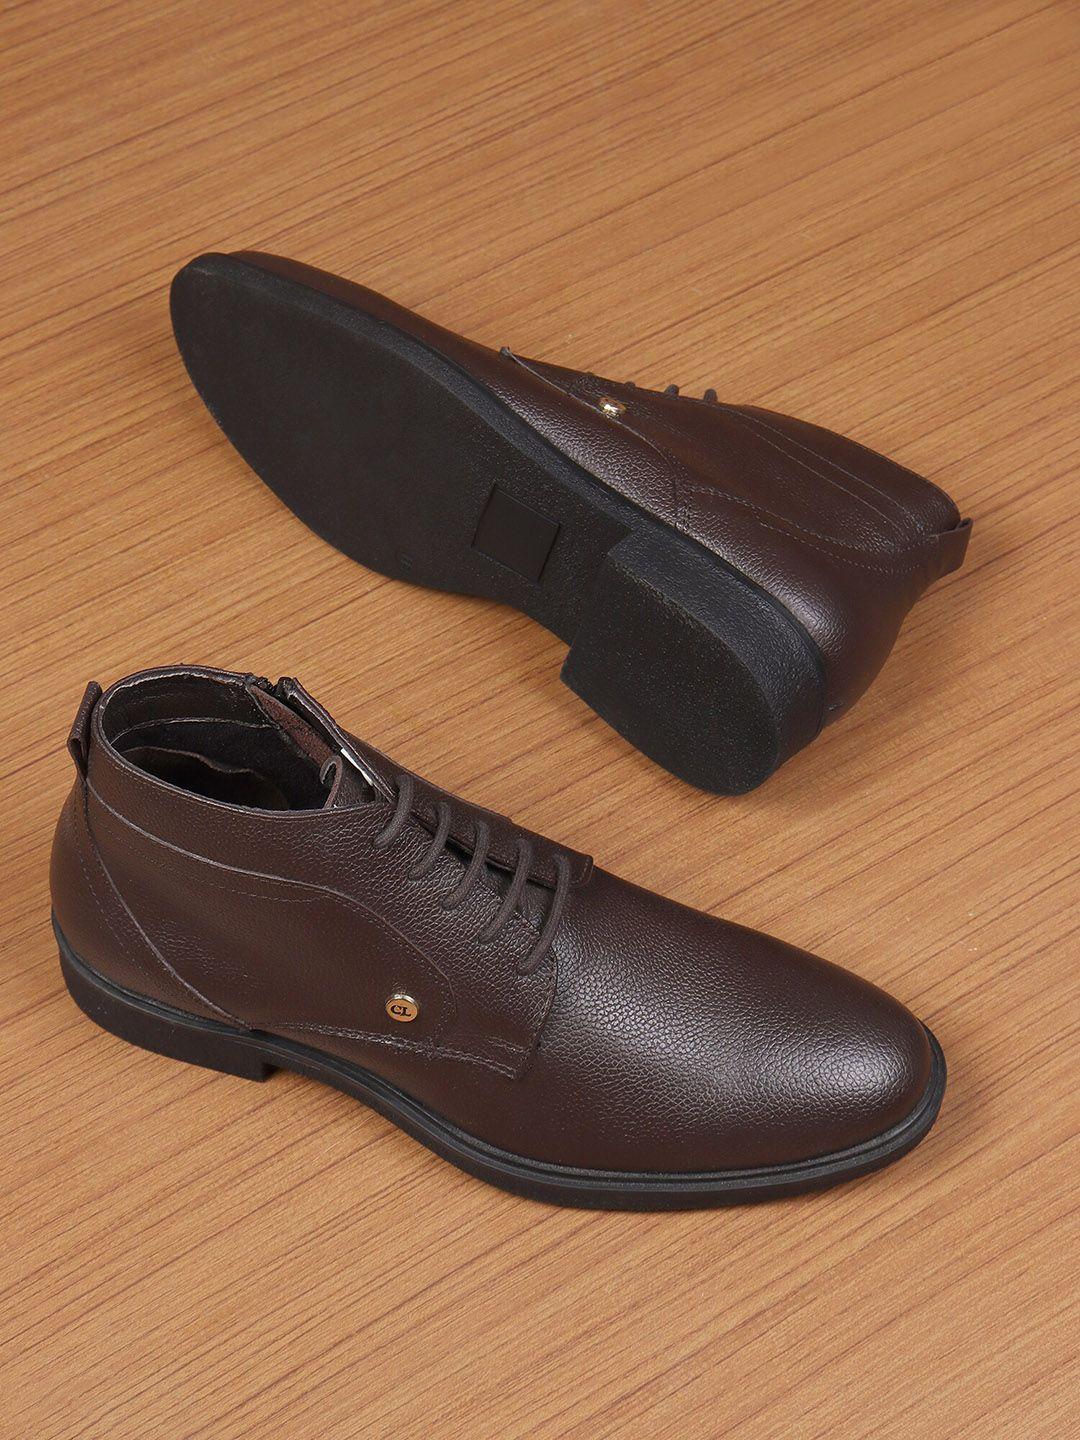 carlton london men brown leather formal shoes